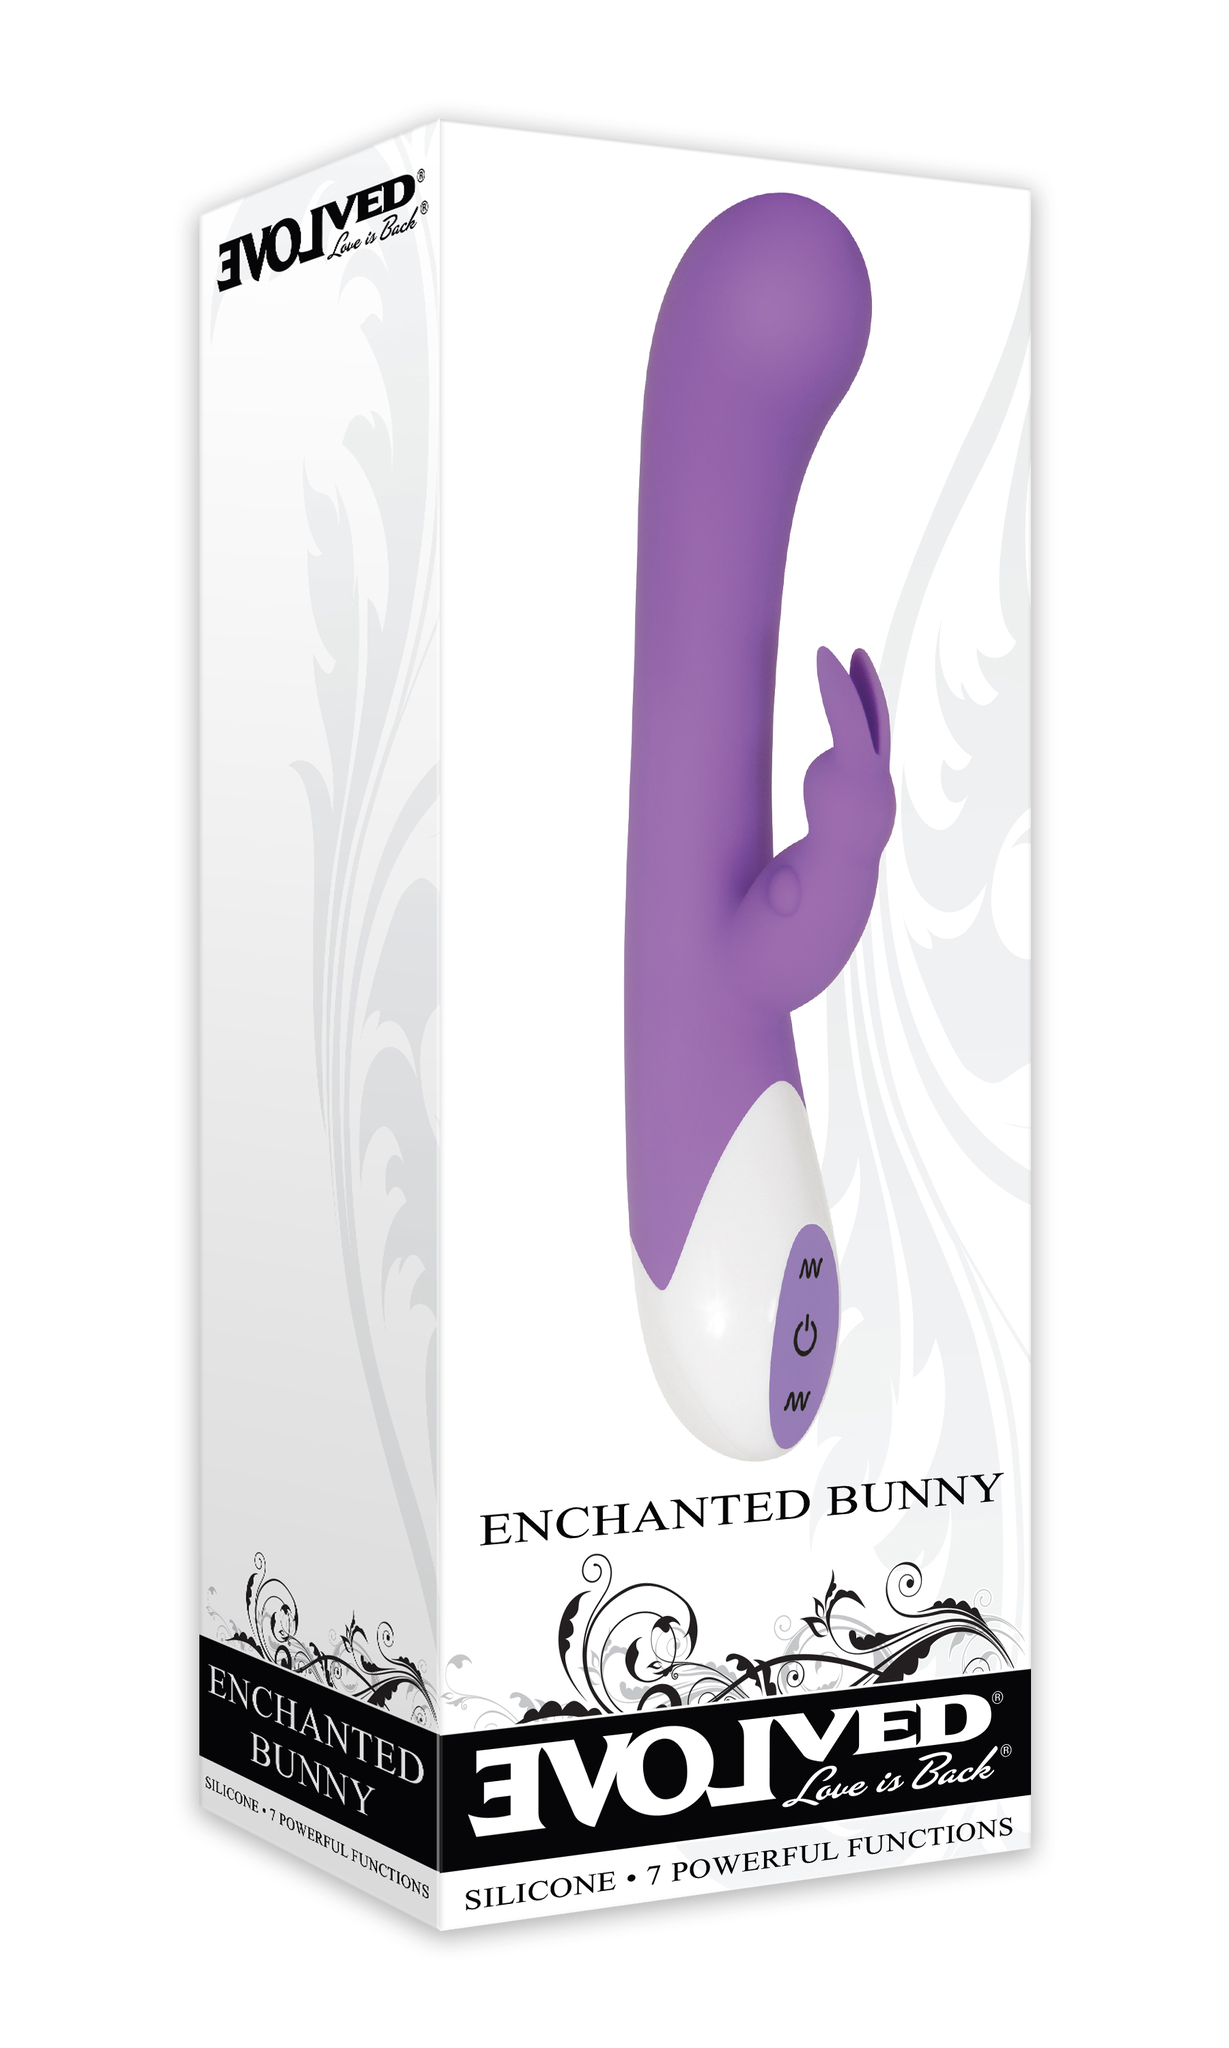 Enchanted-bunny-front.jpg